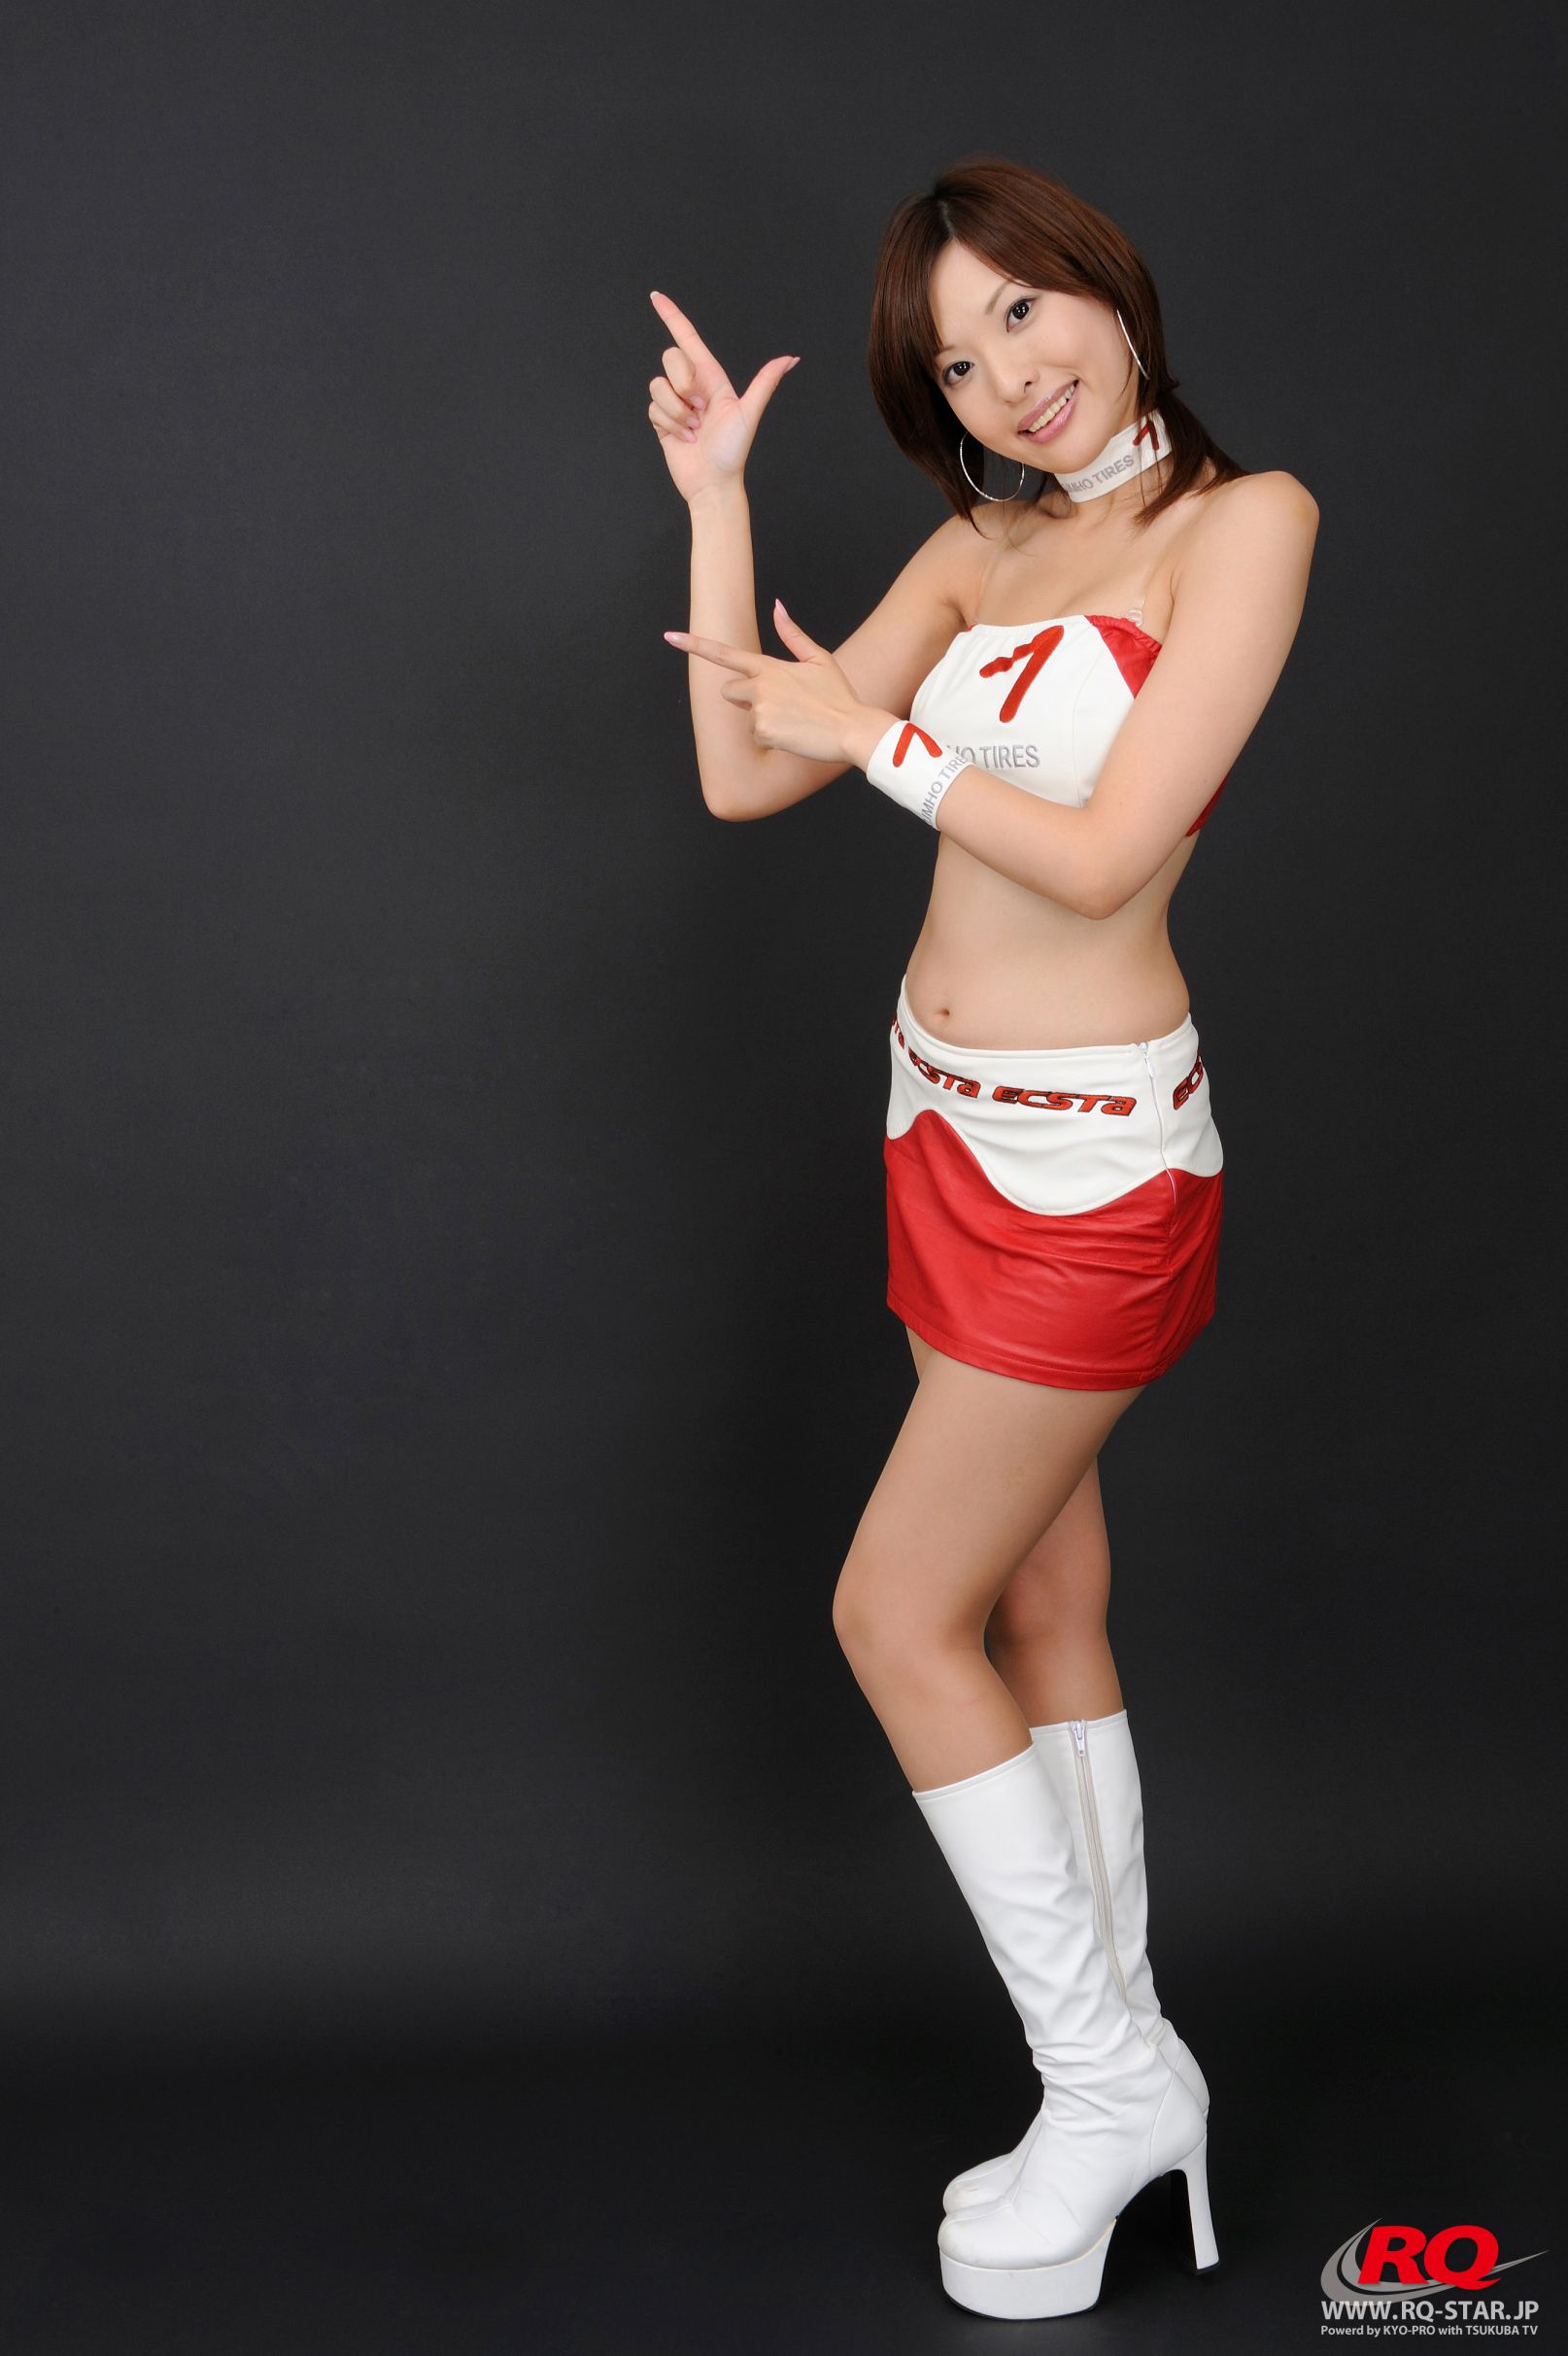 [RQ-STAR] NO.00008 Mayumi Morishita 森下まゆみ Race Queen – 2008 Kumho 写真集/(109P)